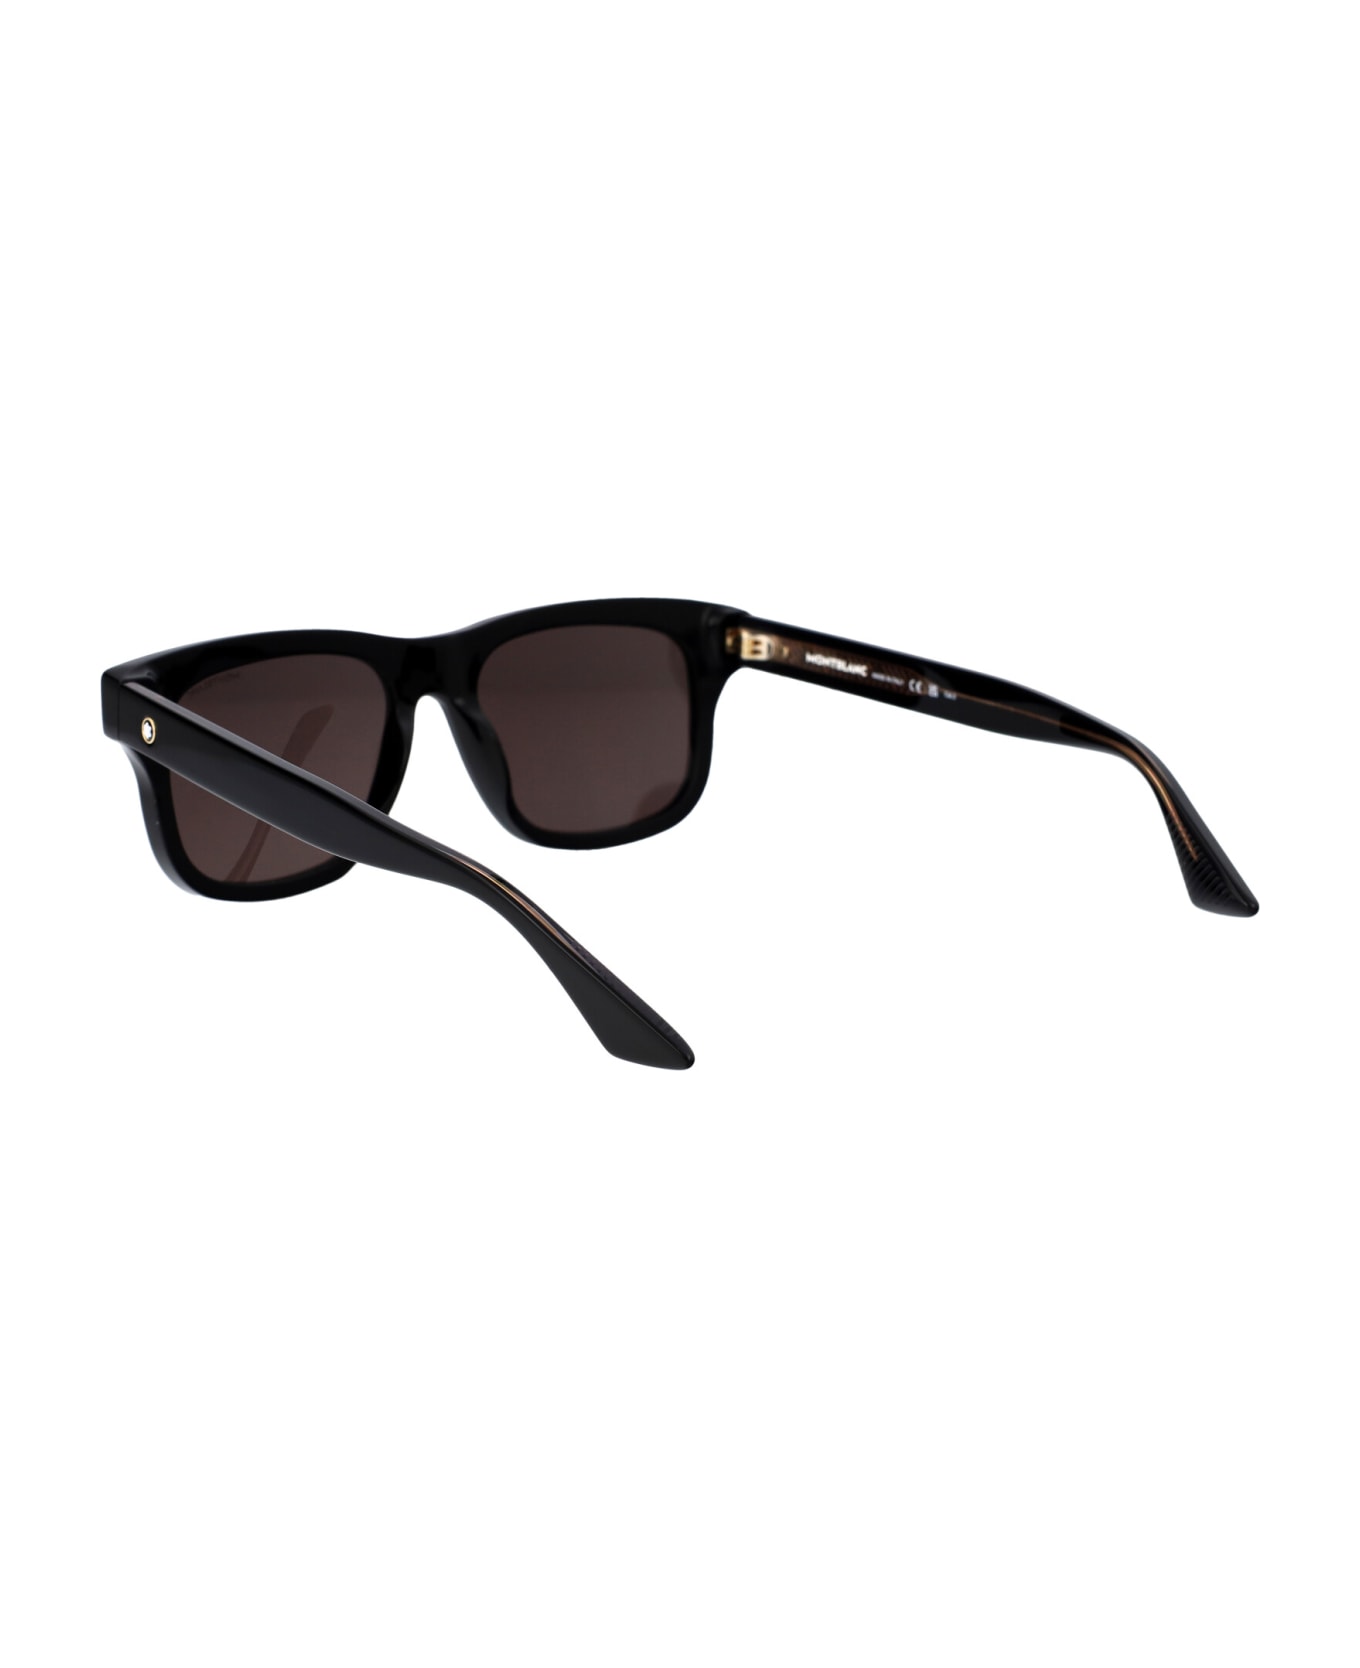 Montblanc Mb0319s Sunglasses - 001 BLACK BLACK GREY